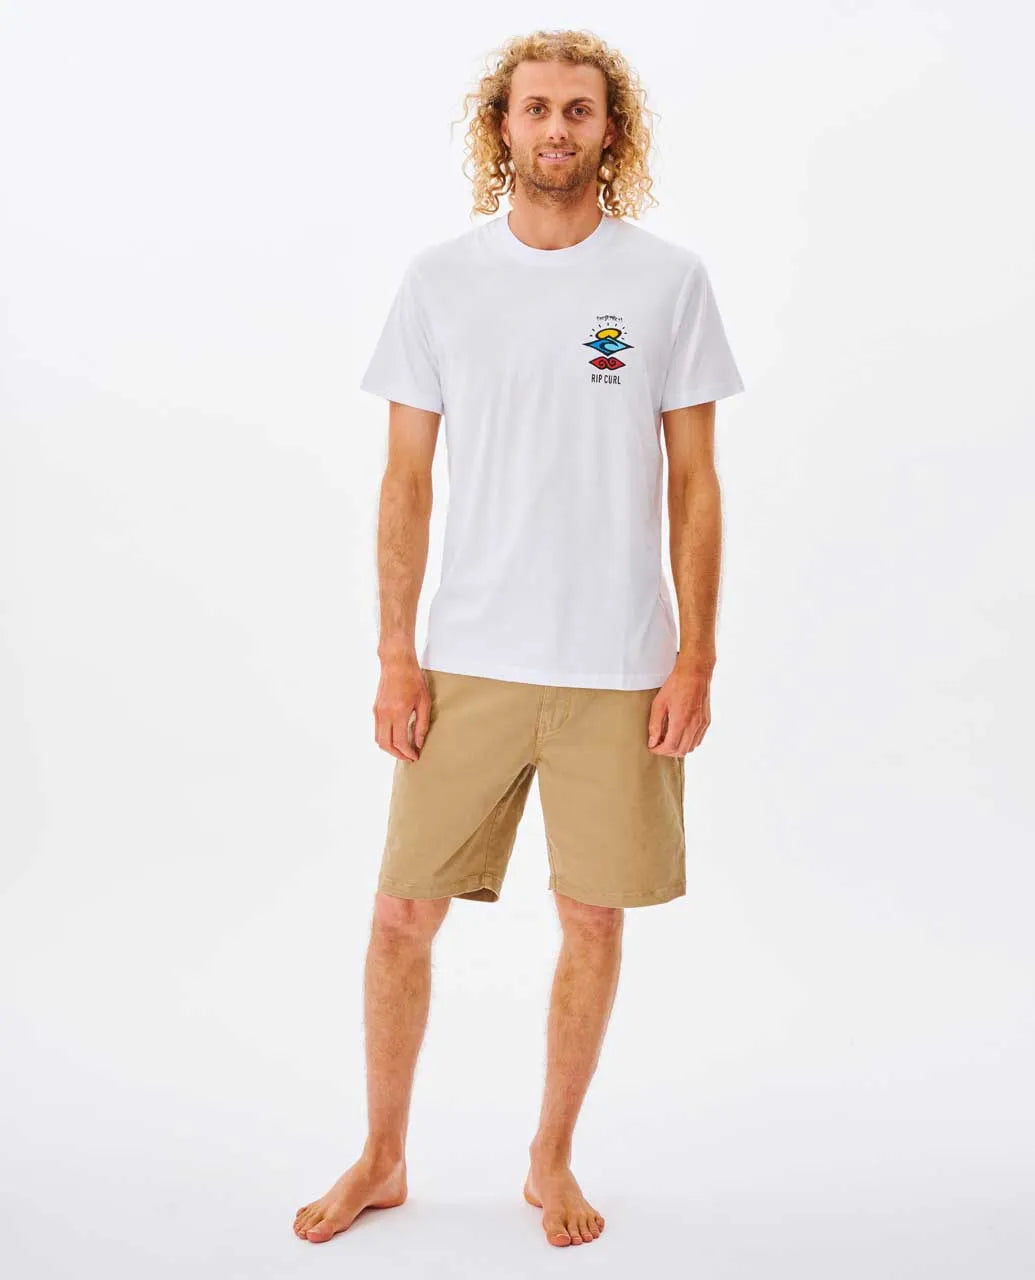 Ripcurl Search Icon Premium Tee - White Mens T Shirt